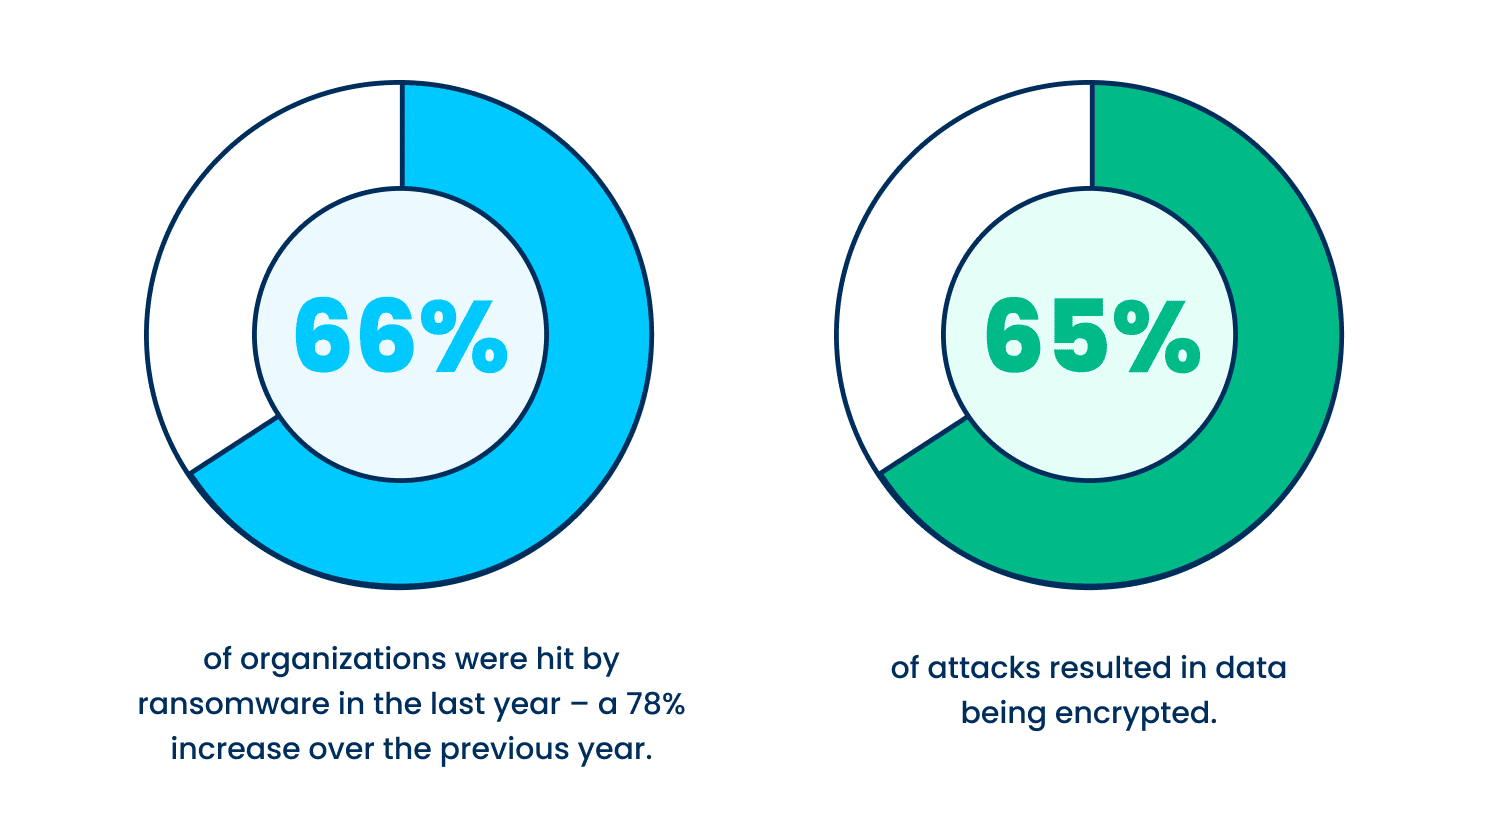 Prevalence of attacks